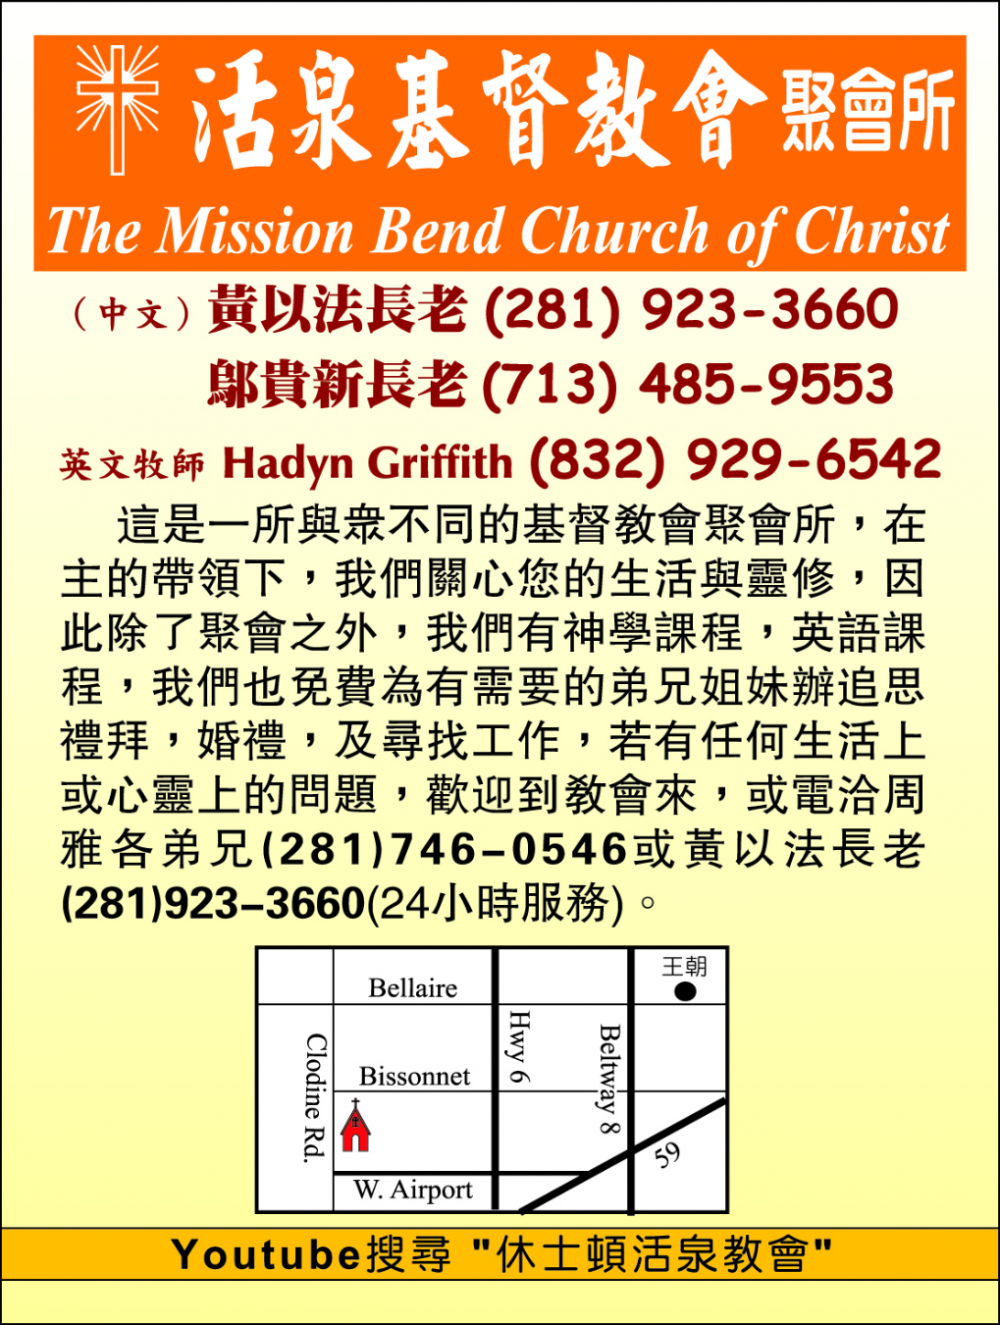 The Mission Bend Church of Christ 活泉基督教会